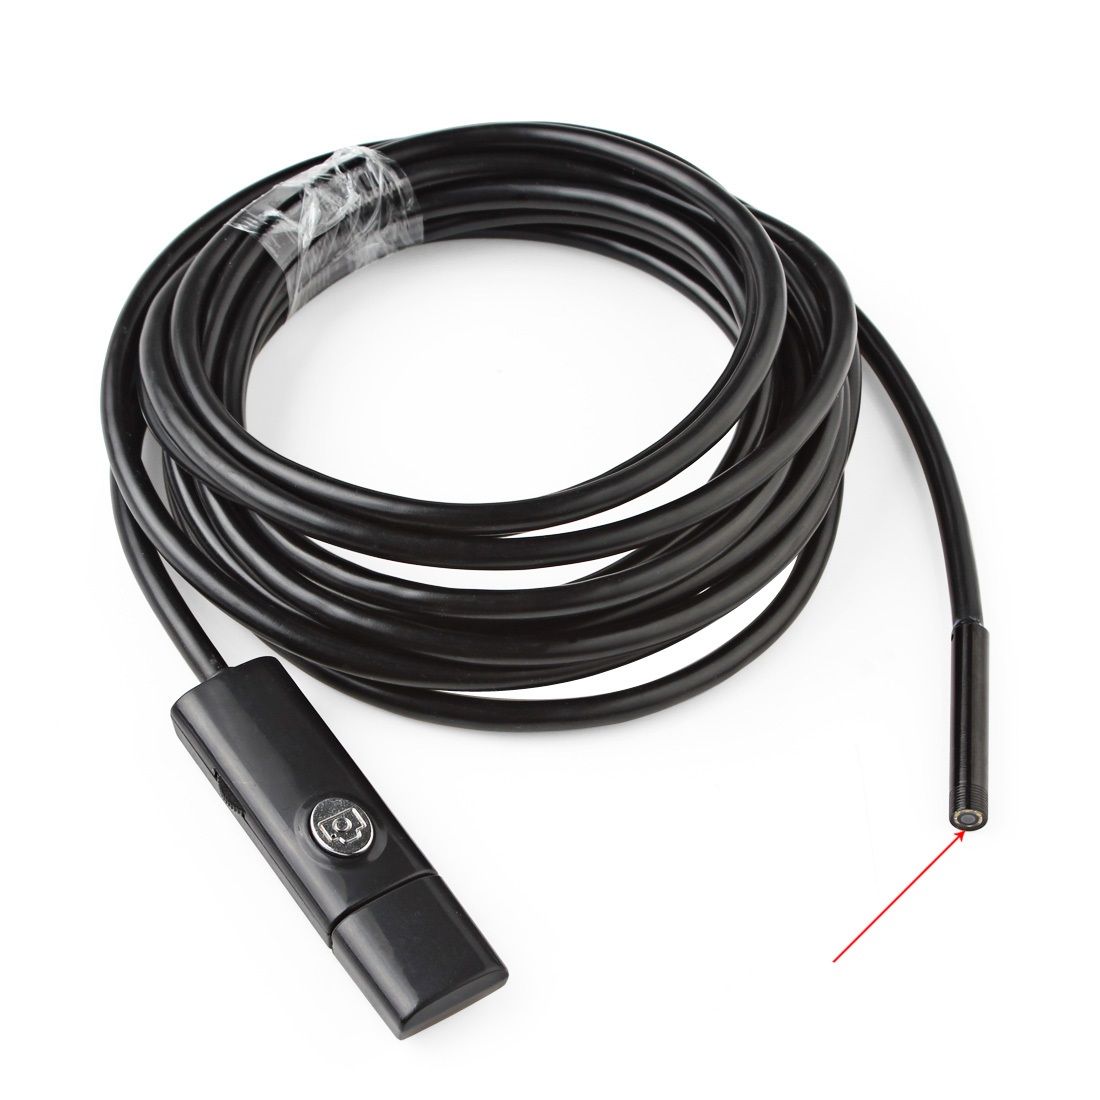 Pipe Inspection Camera Plumbing Video USB Endoscope Waterproof 6-LED Lights New